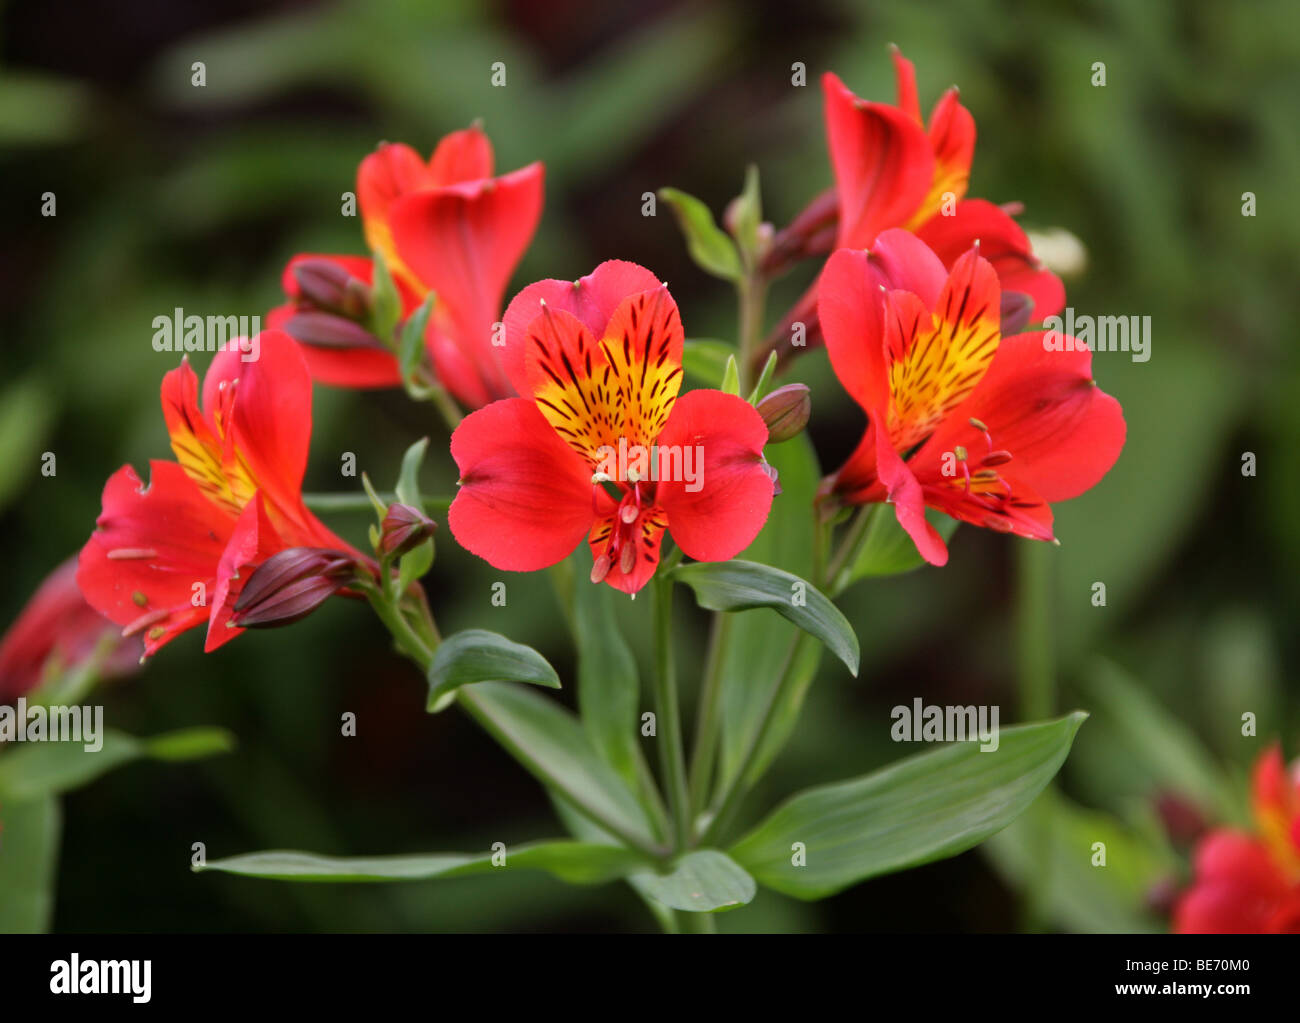 Peruvian Lily or Lily of the Incas (Alstroemeria "Red Beauty", Cultivar), Alstroemeriaceae. Peru, South America. Stock Photo